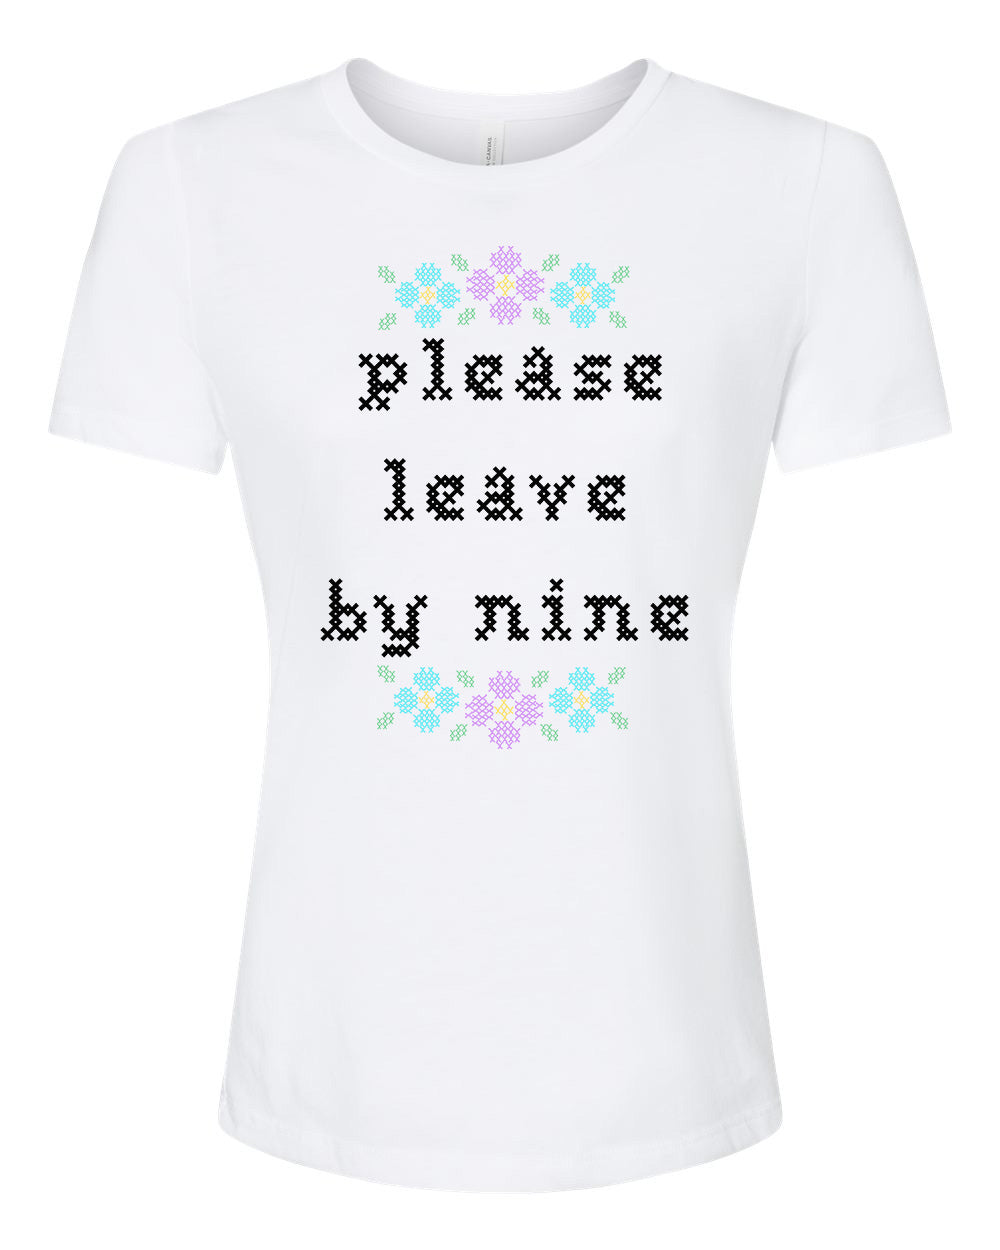 Please Leave By Nine - Cross Stitch Design - Women's Crew Tee - White